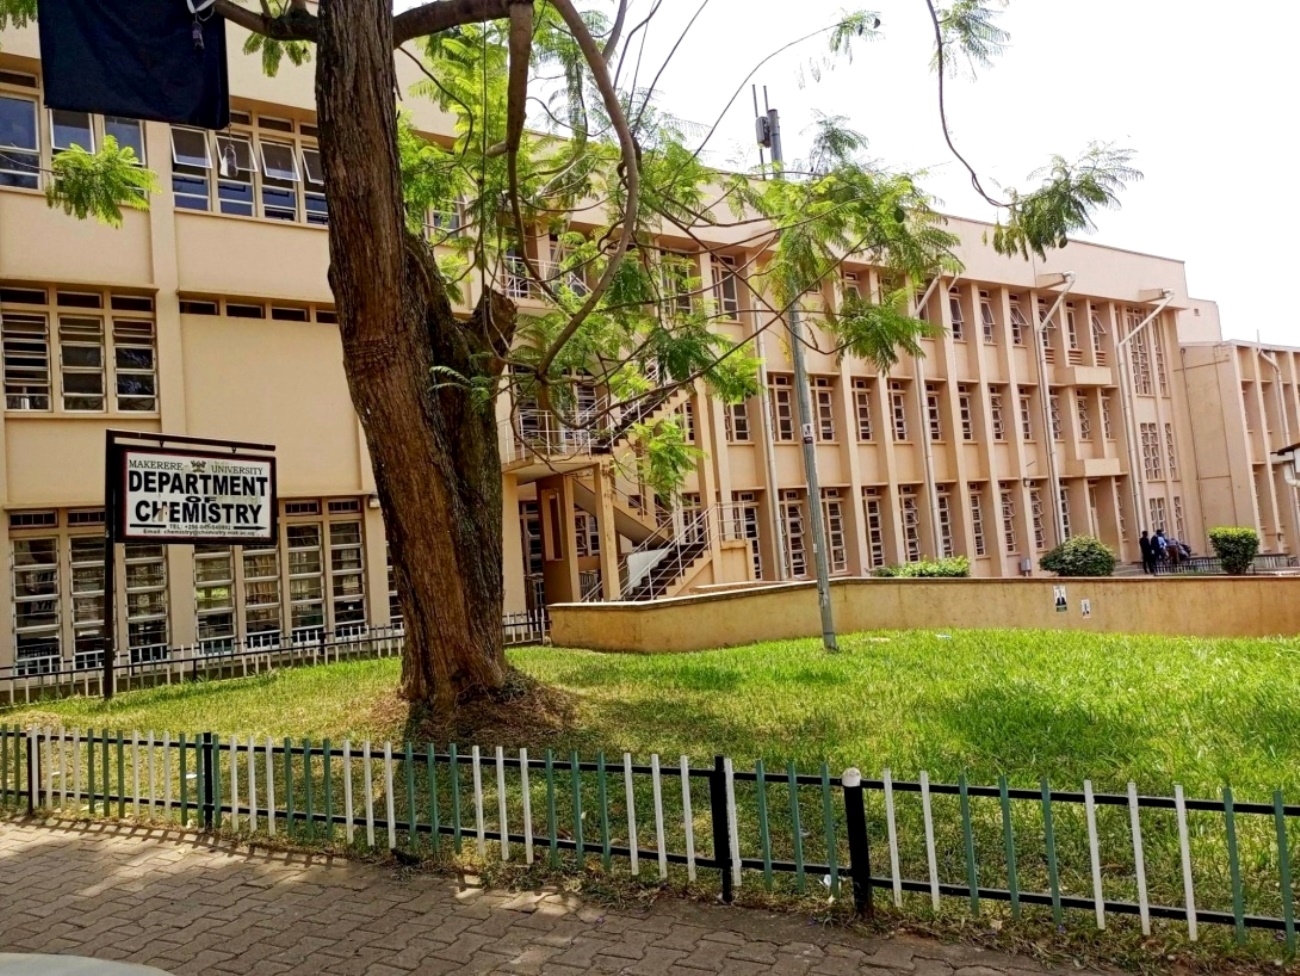 The Department of Chemistry Building, College of Natrual Sciences (CoNAS), Makerere University, Kampala Uganda.